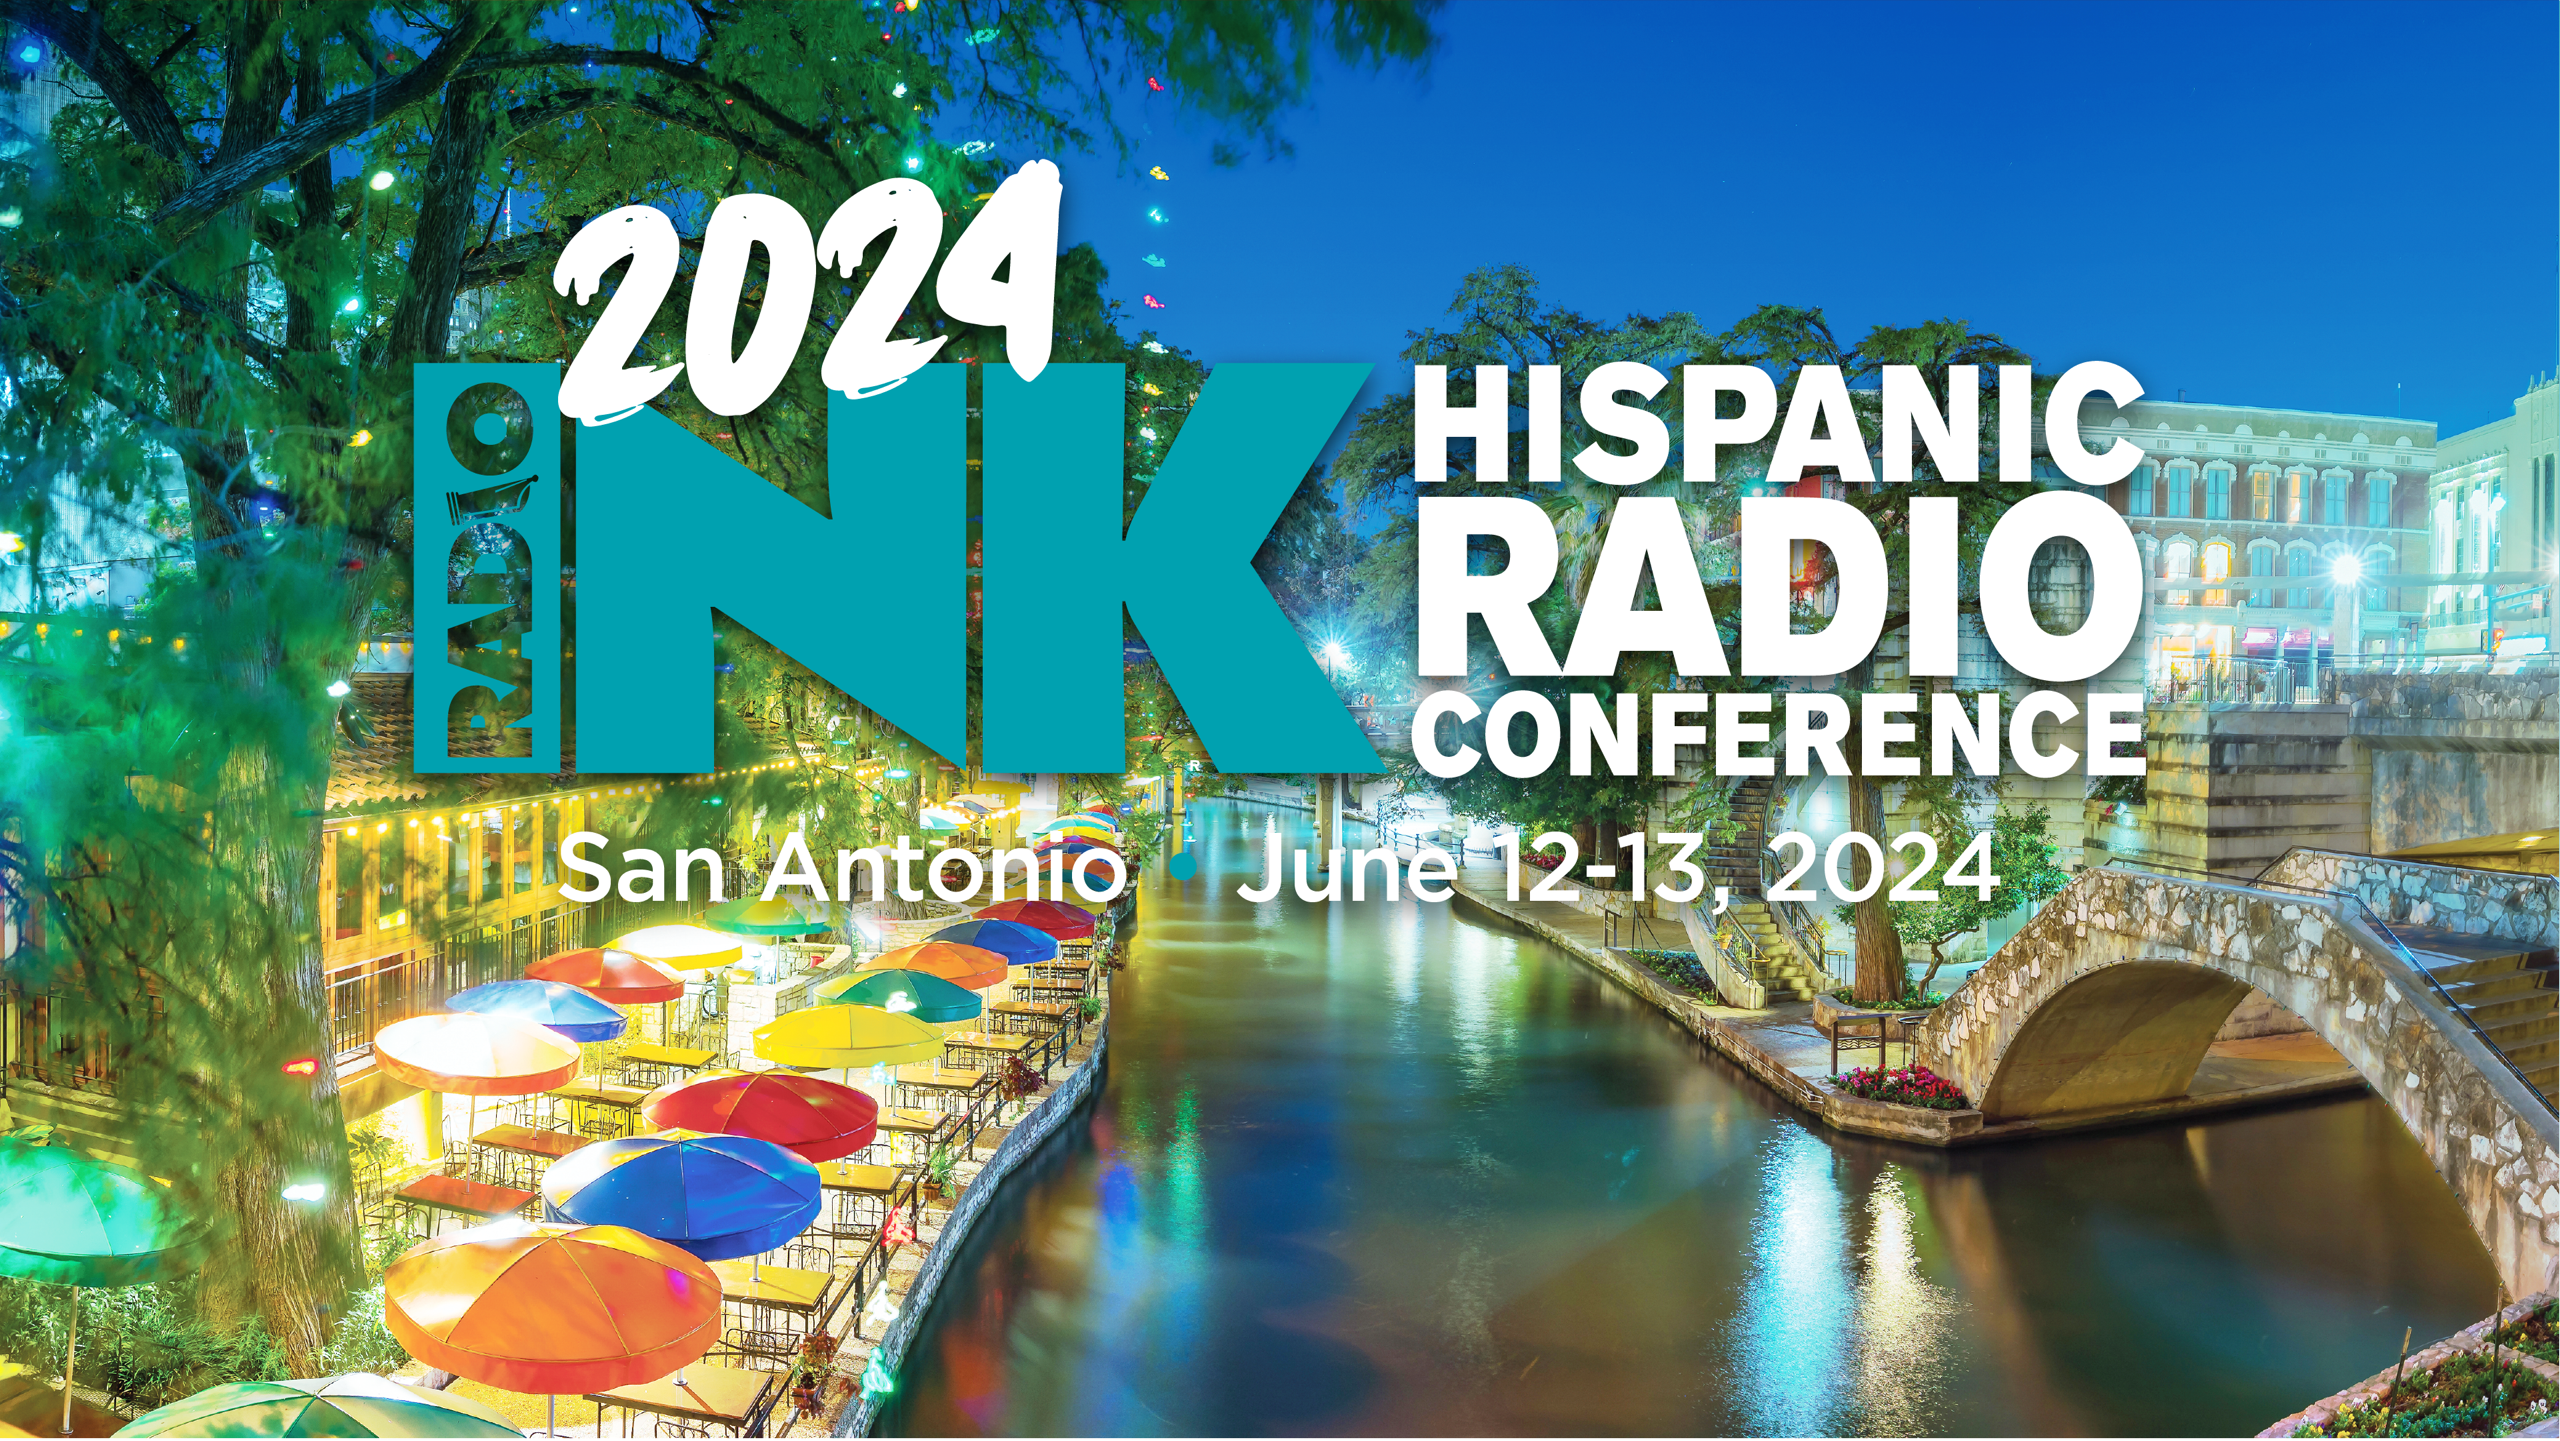 2024 Hispanic Radio Conference – Early Bird Registration Price